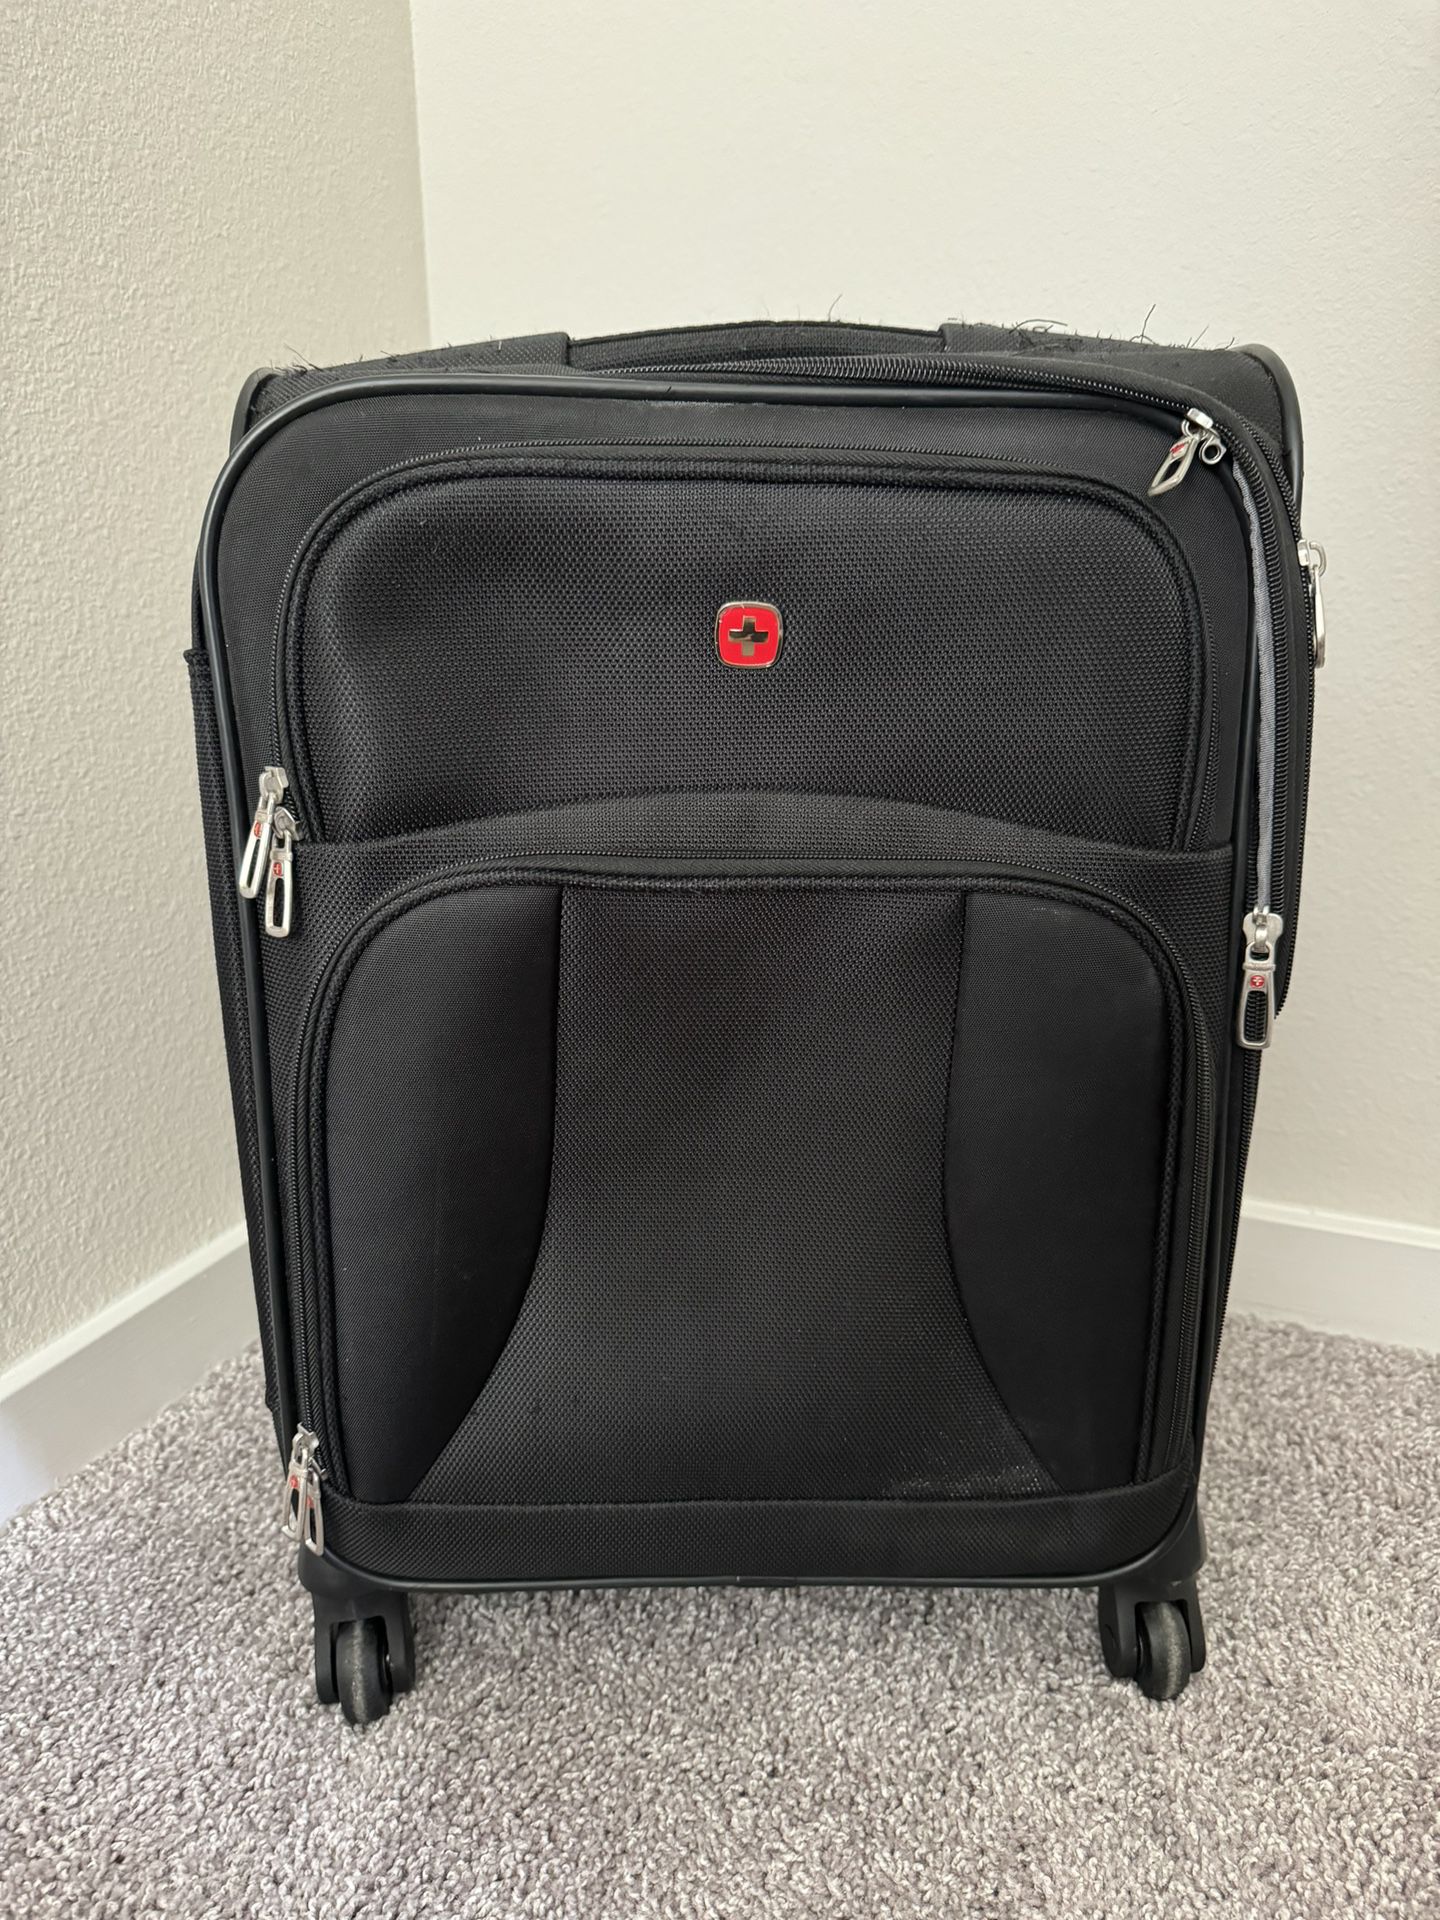 SWISSGEAR Travel Suitcase 